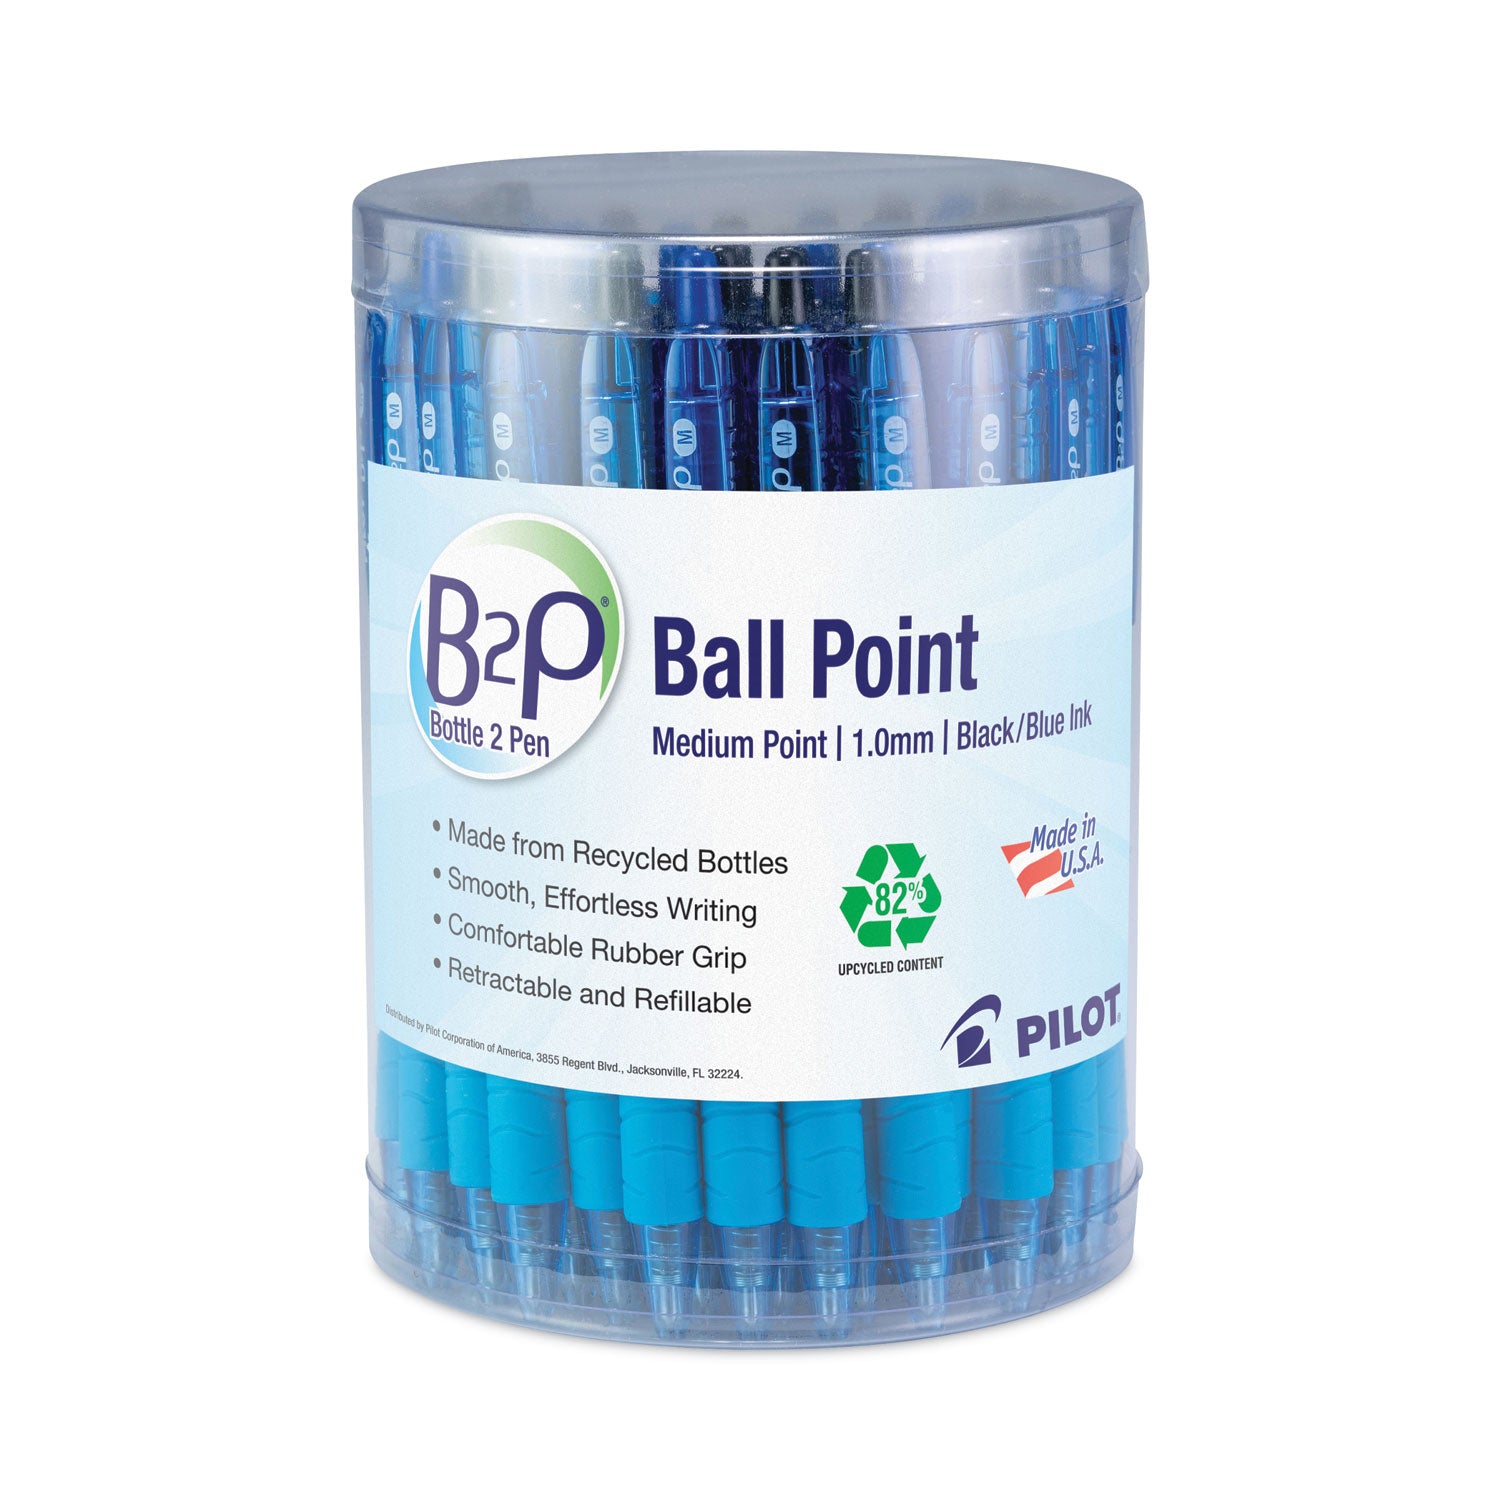 b2p-bottle-2-pen-recycled-ballpoint-pen-retractable-medium-1-mm-assorted-ink-colors-translucent-blue-barrel-36-pack_pil57050 - 1